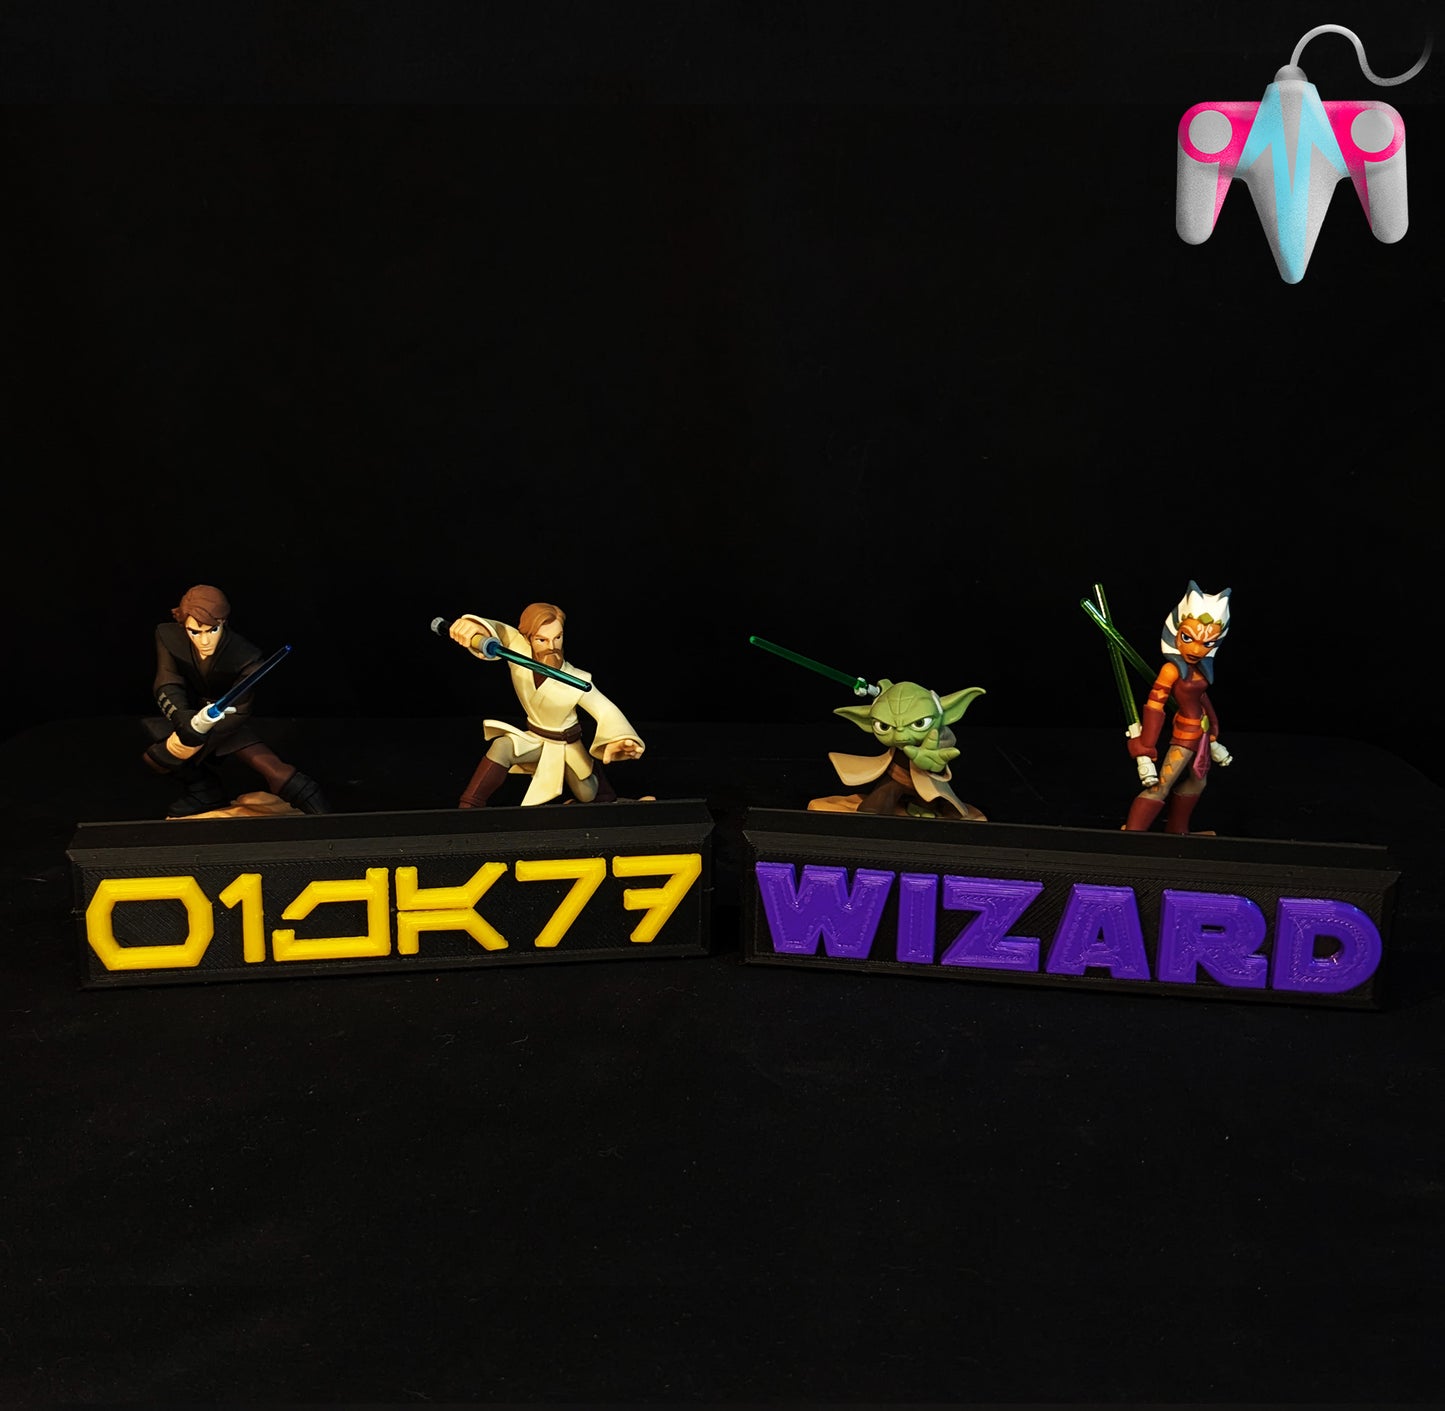 3D Printed WIZARD Plaque Wall/Shelf Decor (FREE SHIPPING)